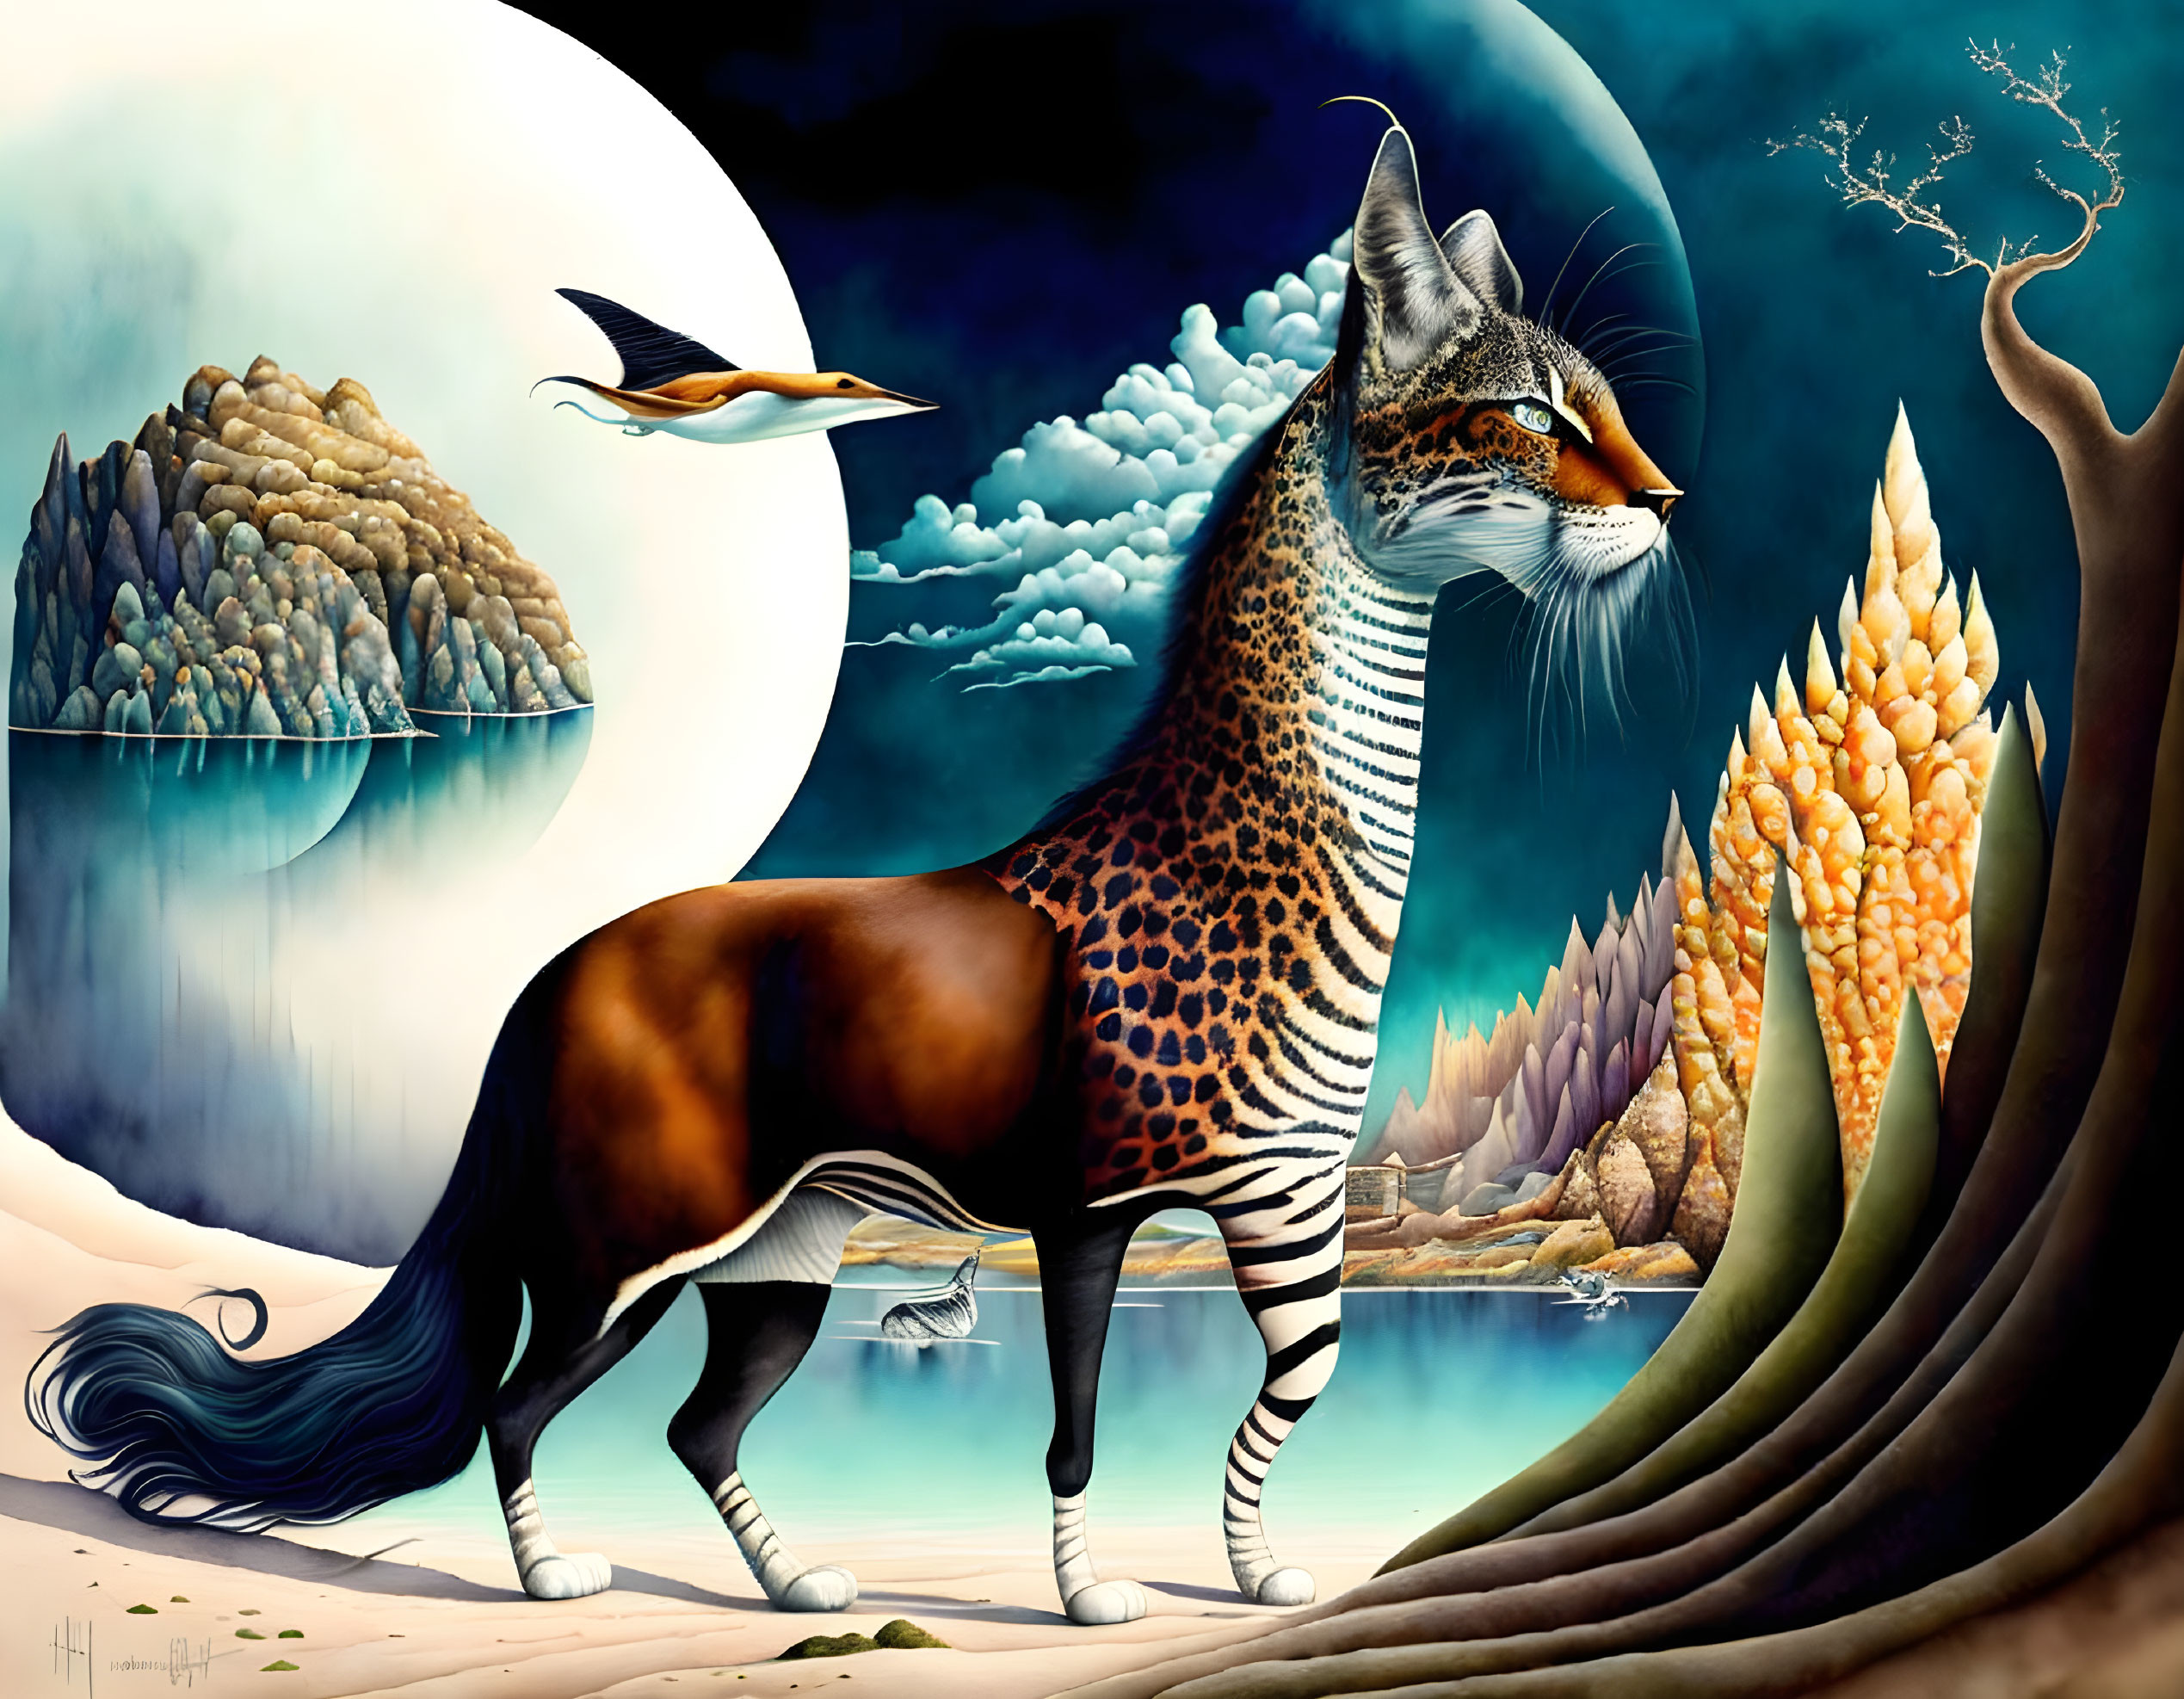  Fantastic fantasy animals in fantastic landscape